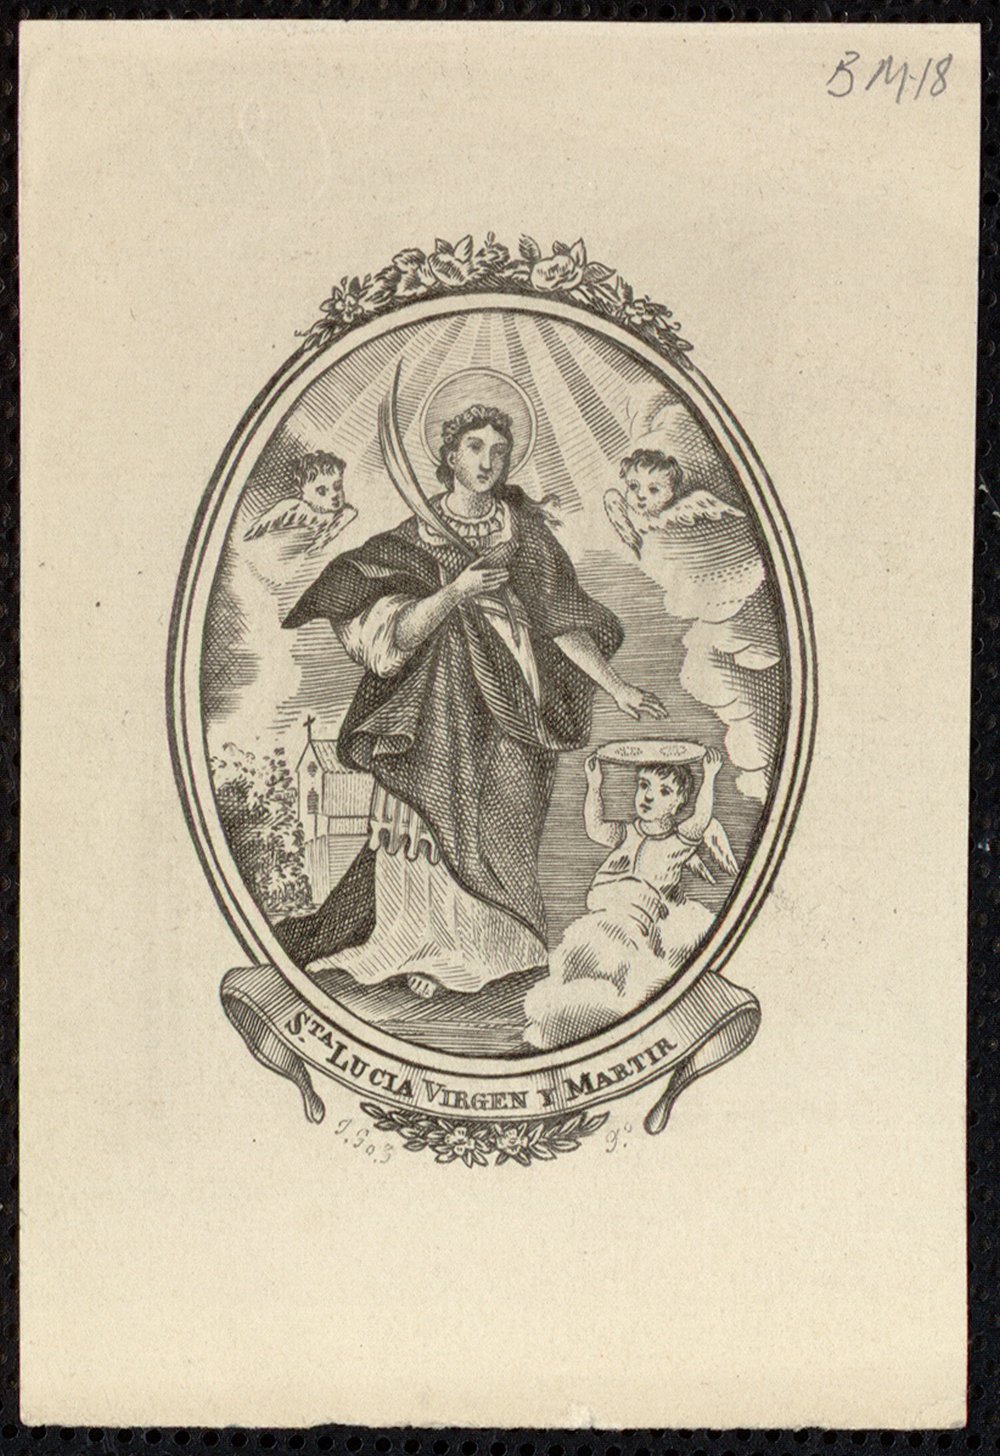 Santa Luca, virgen y martir